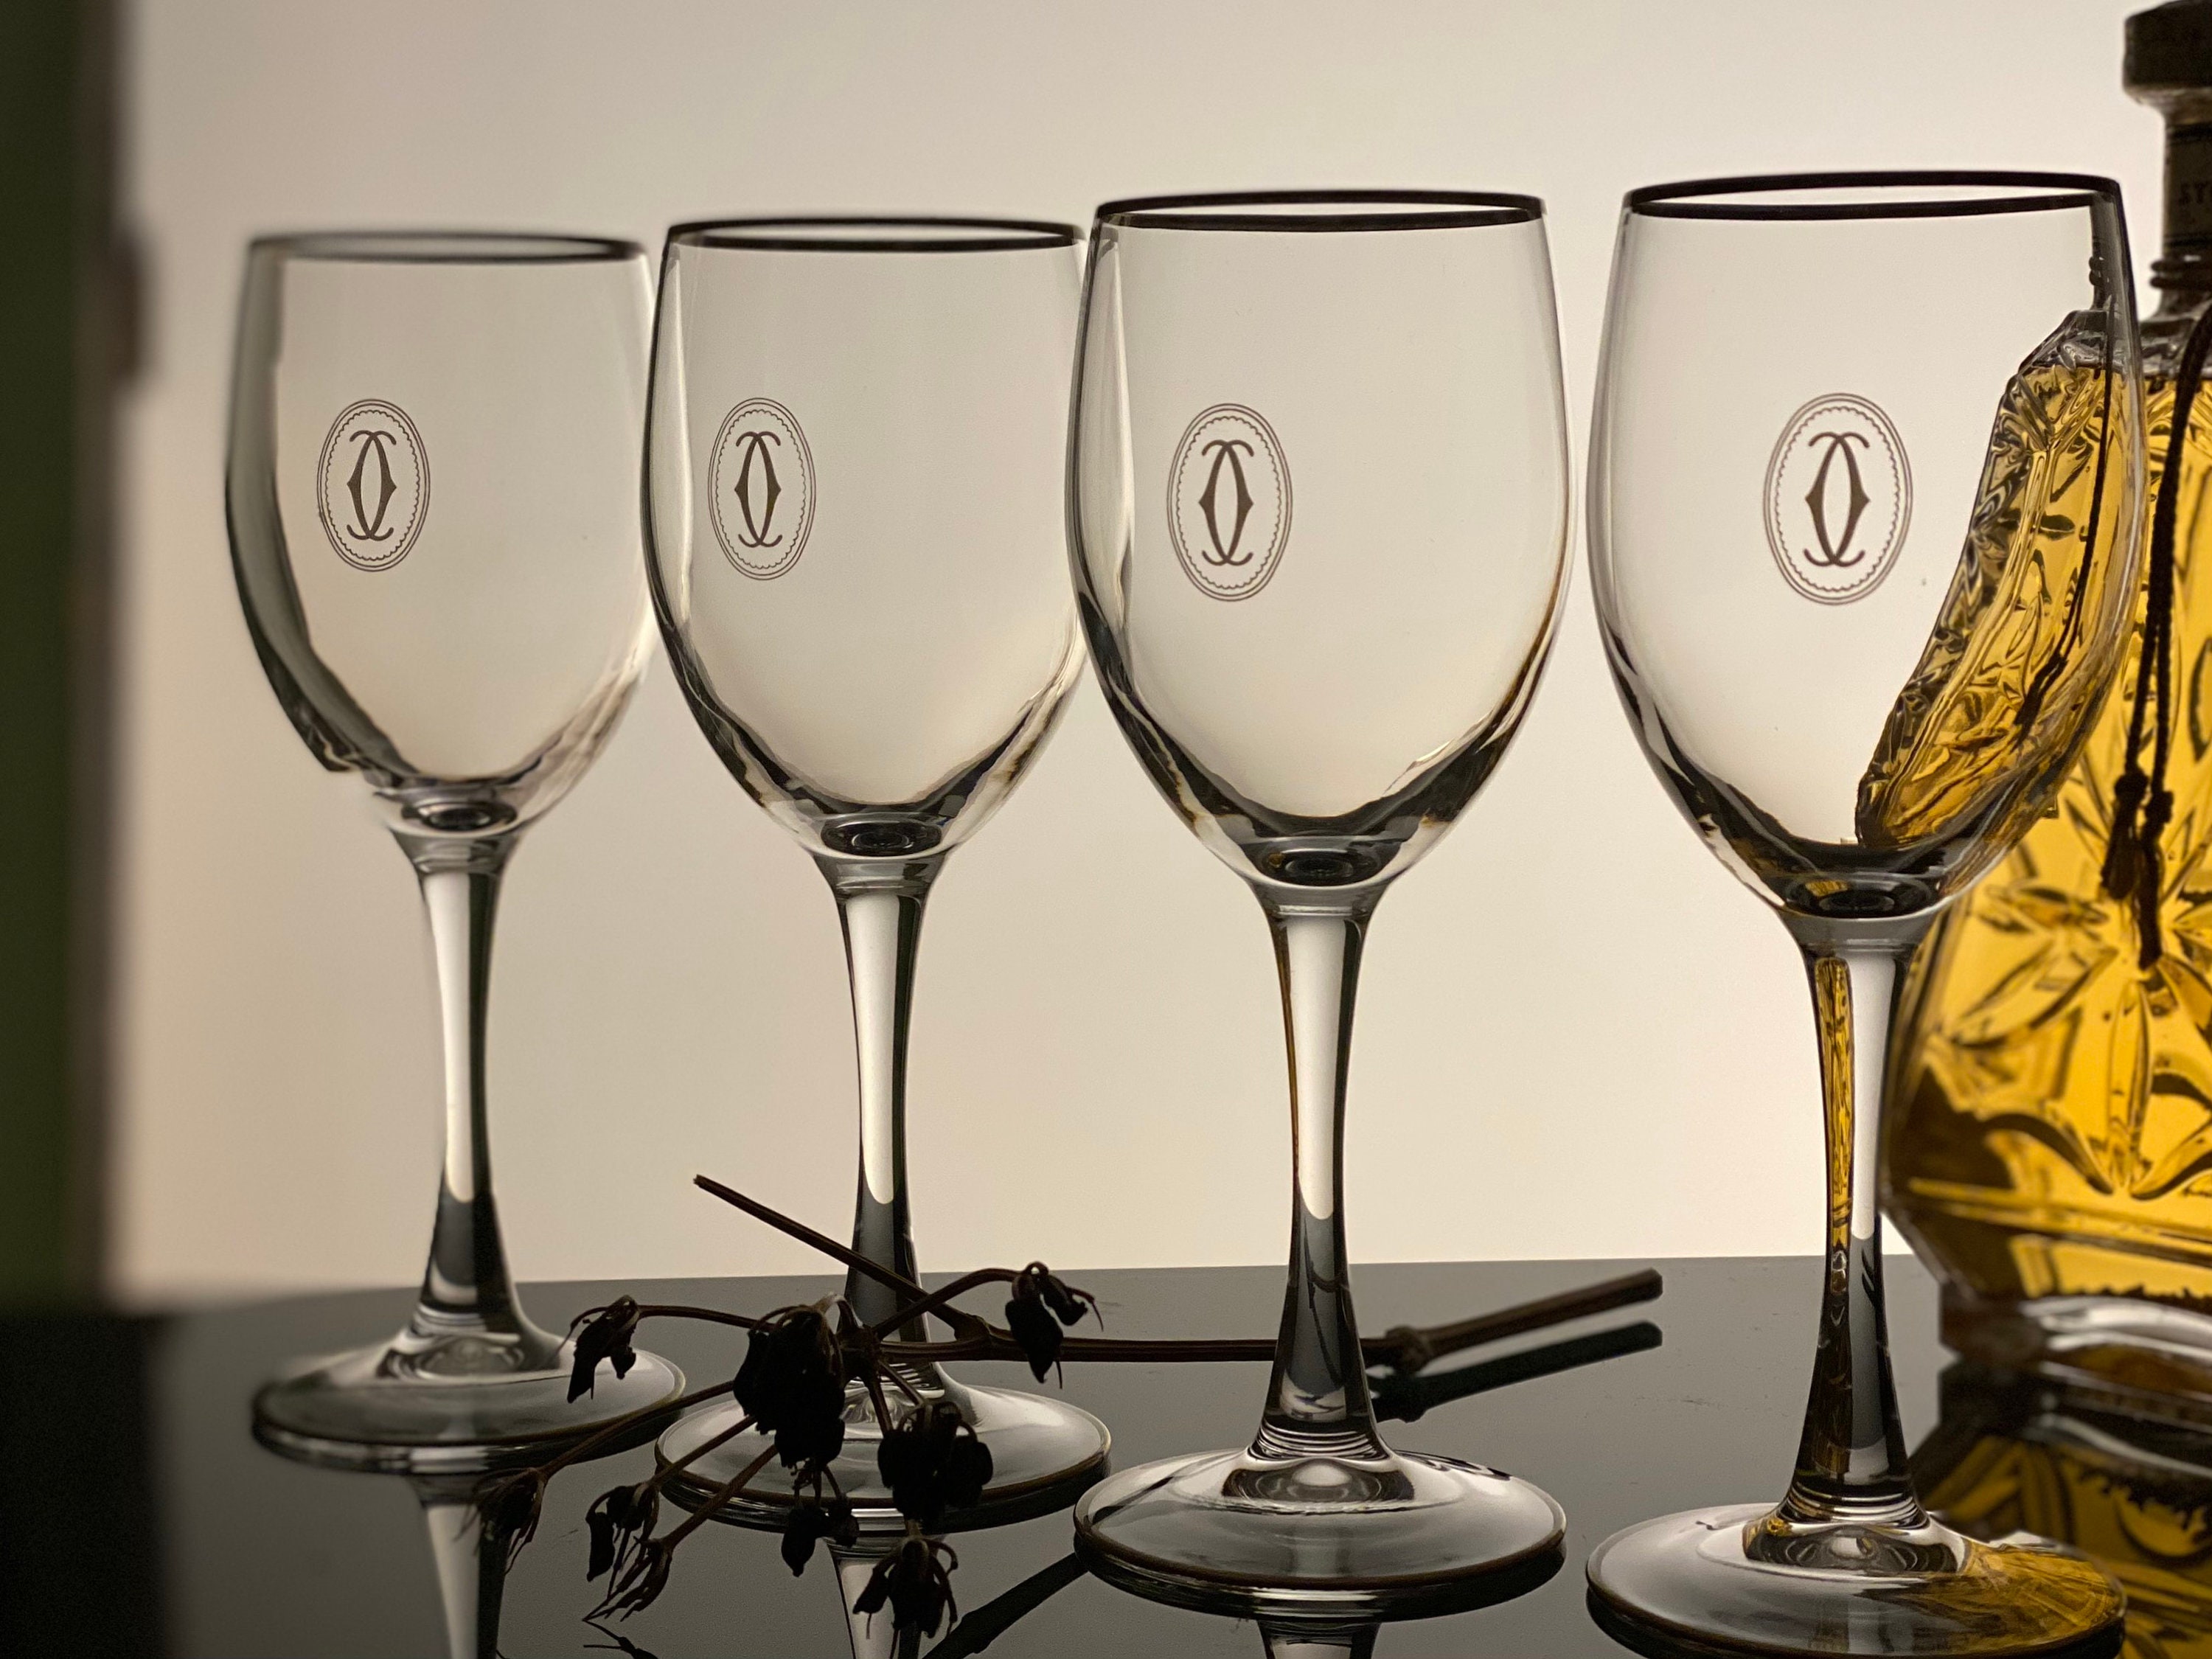 Engraved Puzzle Contour Wine Glasses (Set of 2)